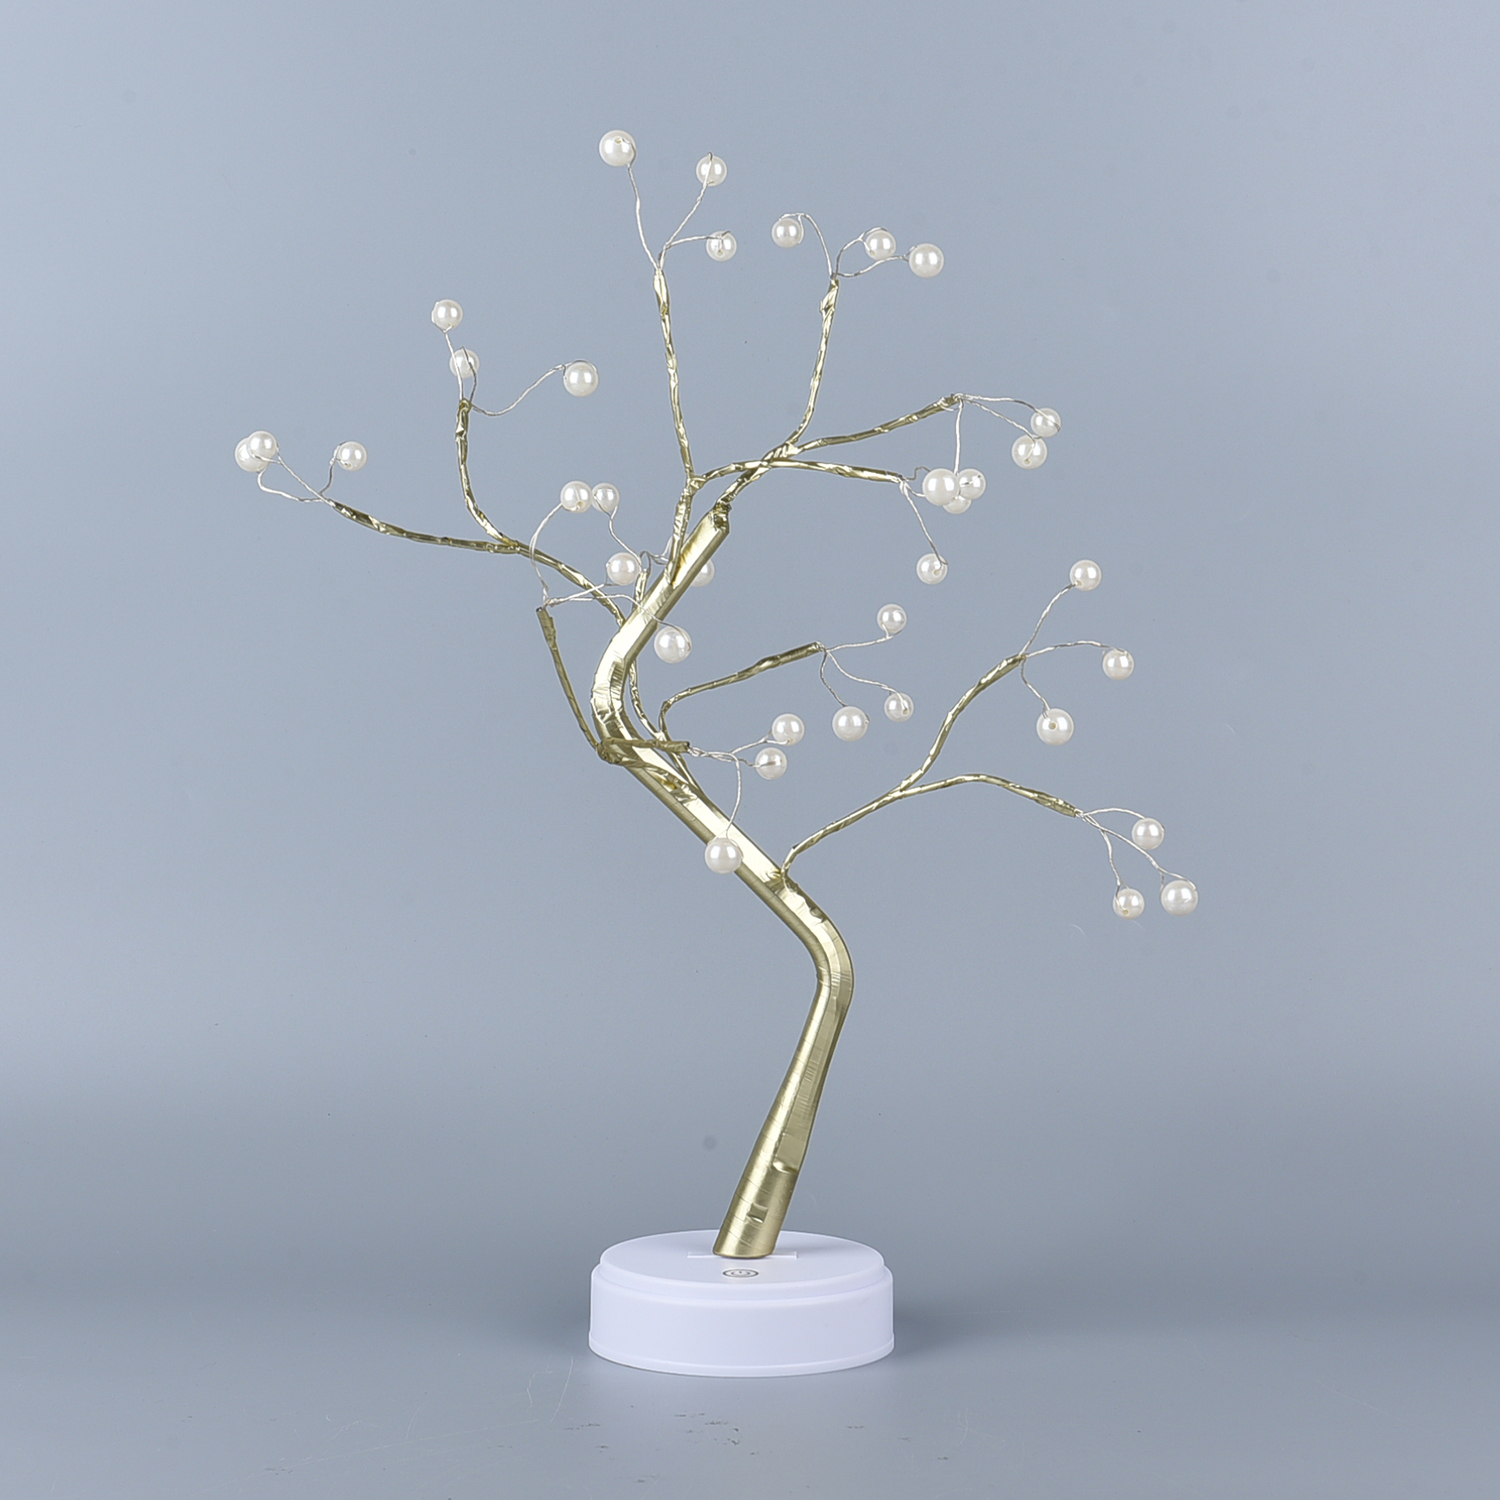 Leuchtbaum 600 cm Höhe, 960 LED, warm white - decopoint webshop, 91,50 €